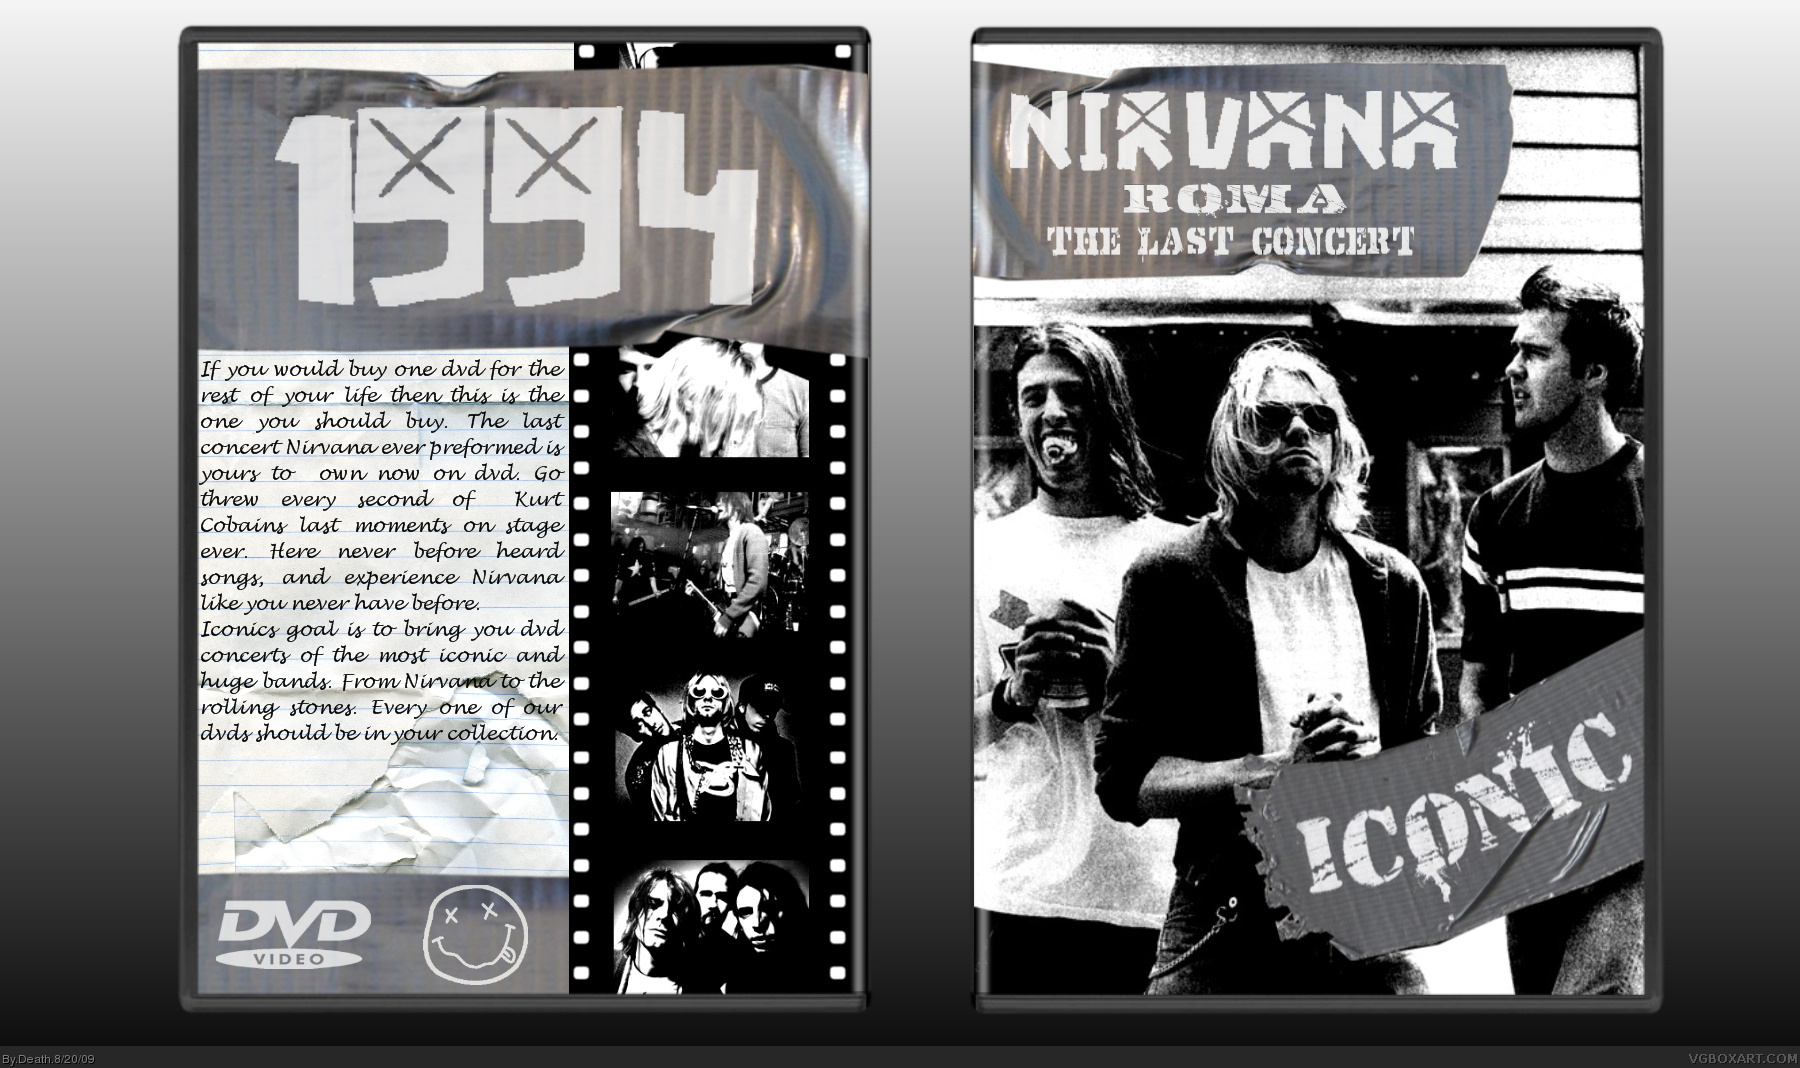 Nirvana: Roma (The Last Concert) box cover